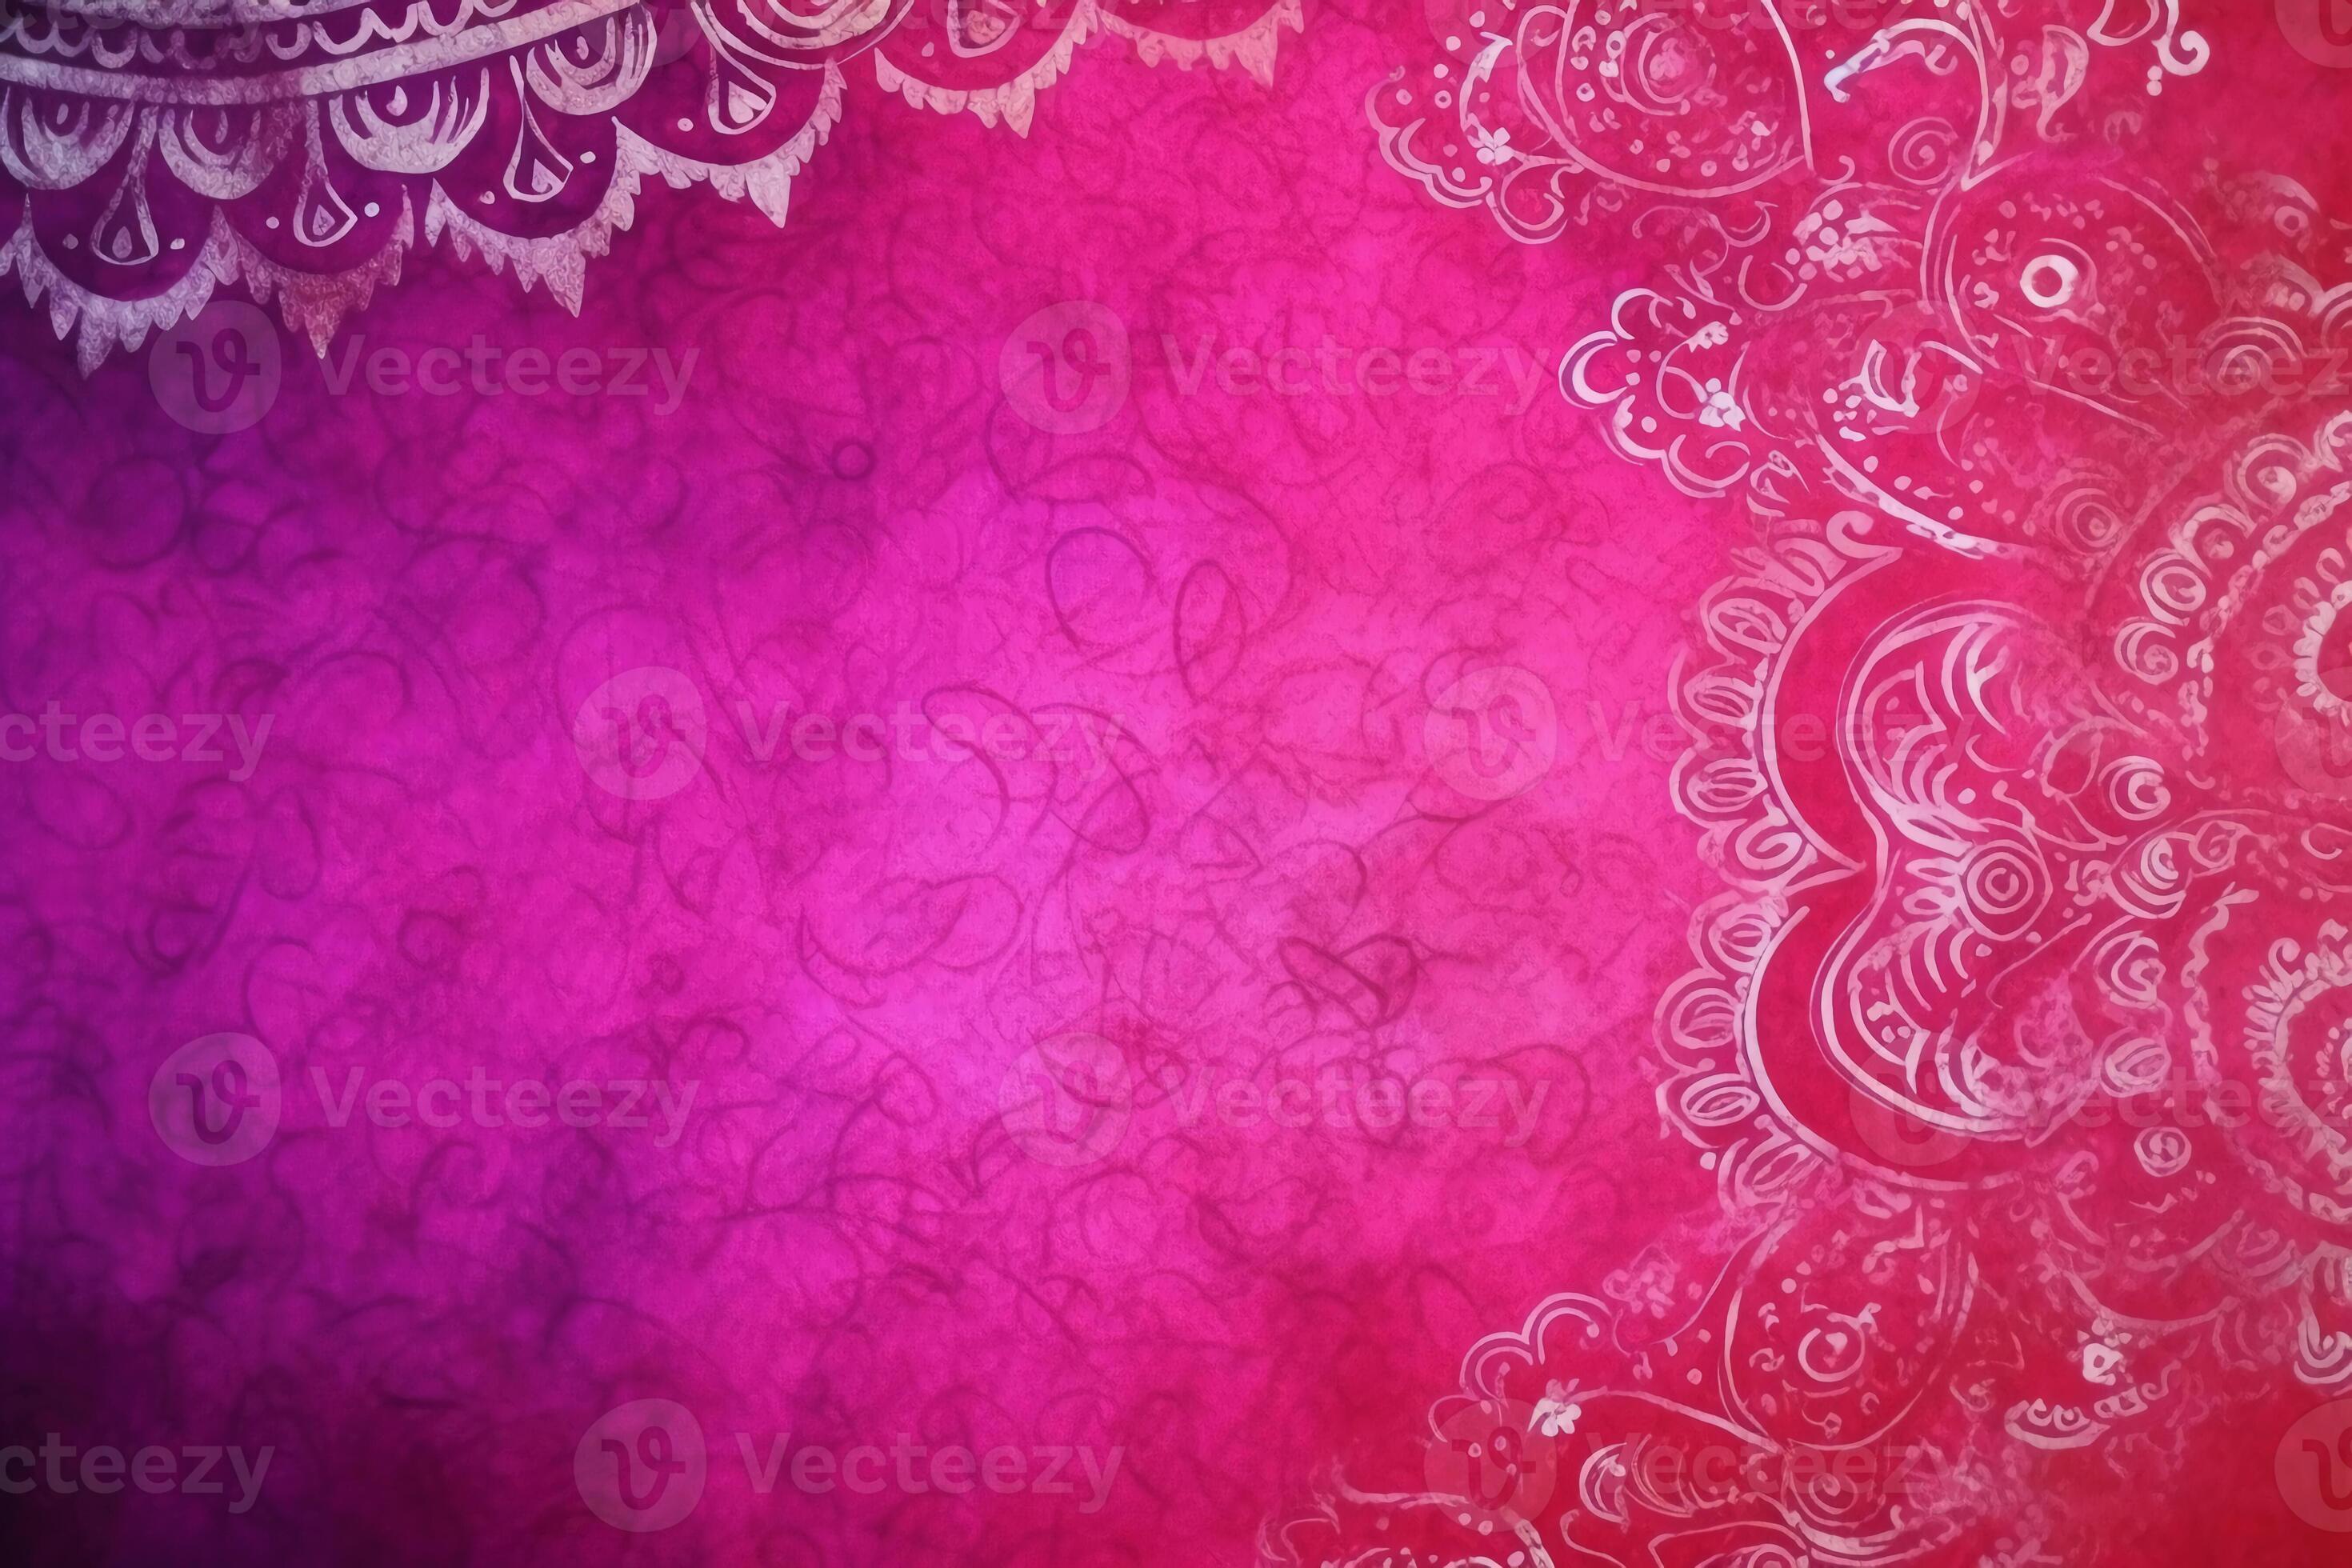 Fuchsia Crayola color background paper texture Rangoli pattern painting. AIgenerative 24180316 Stock Photo at Vecteezy